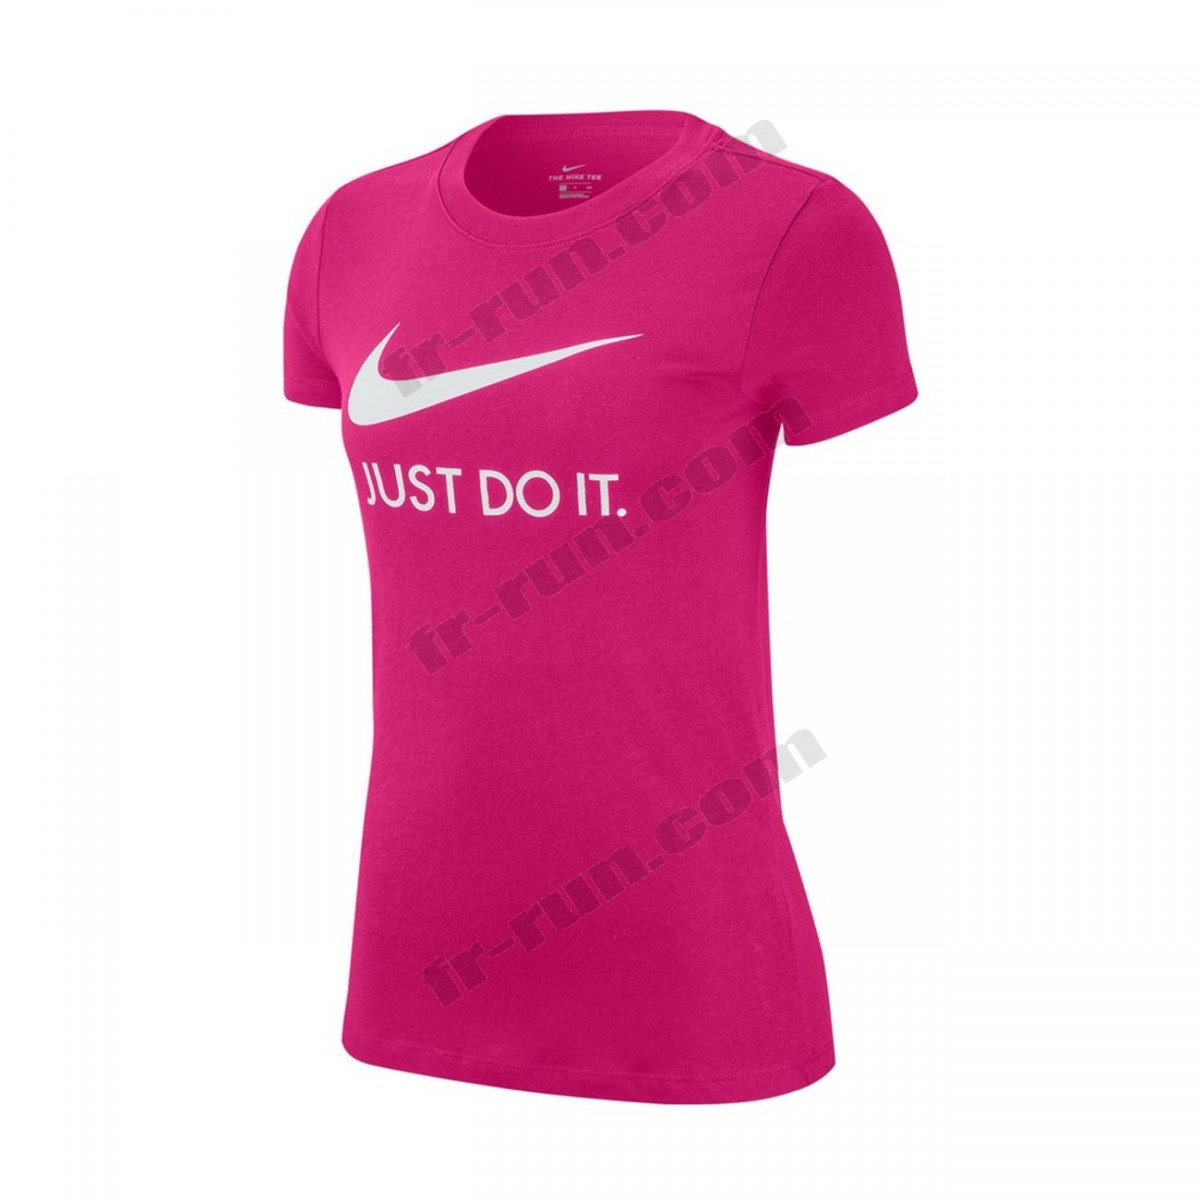 Nike/running femme NIKE Nike Wmns Jdi ◇◇◇ Pas Cher Du Tout - Nike/running femme NIKE Nike Wmns Jdi ◇◇◇ Pas Cher Du Tout